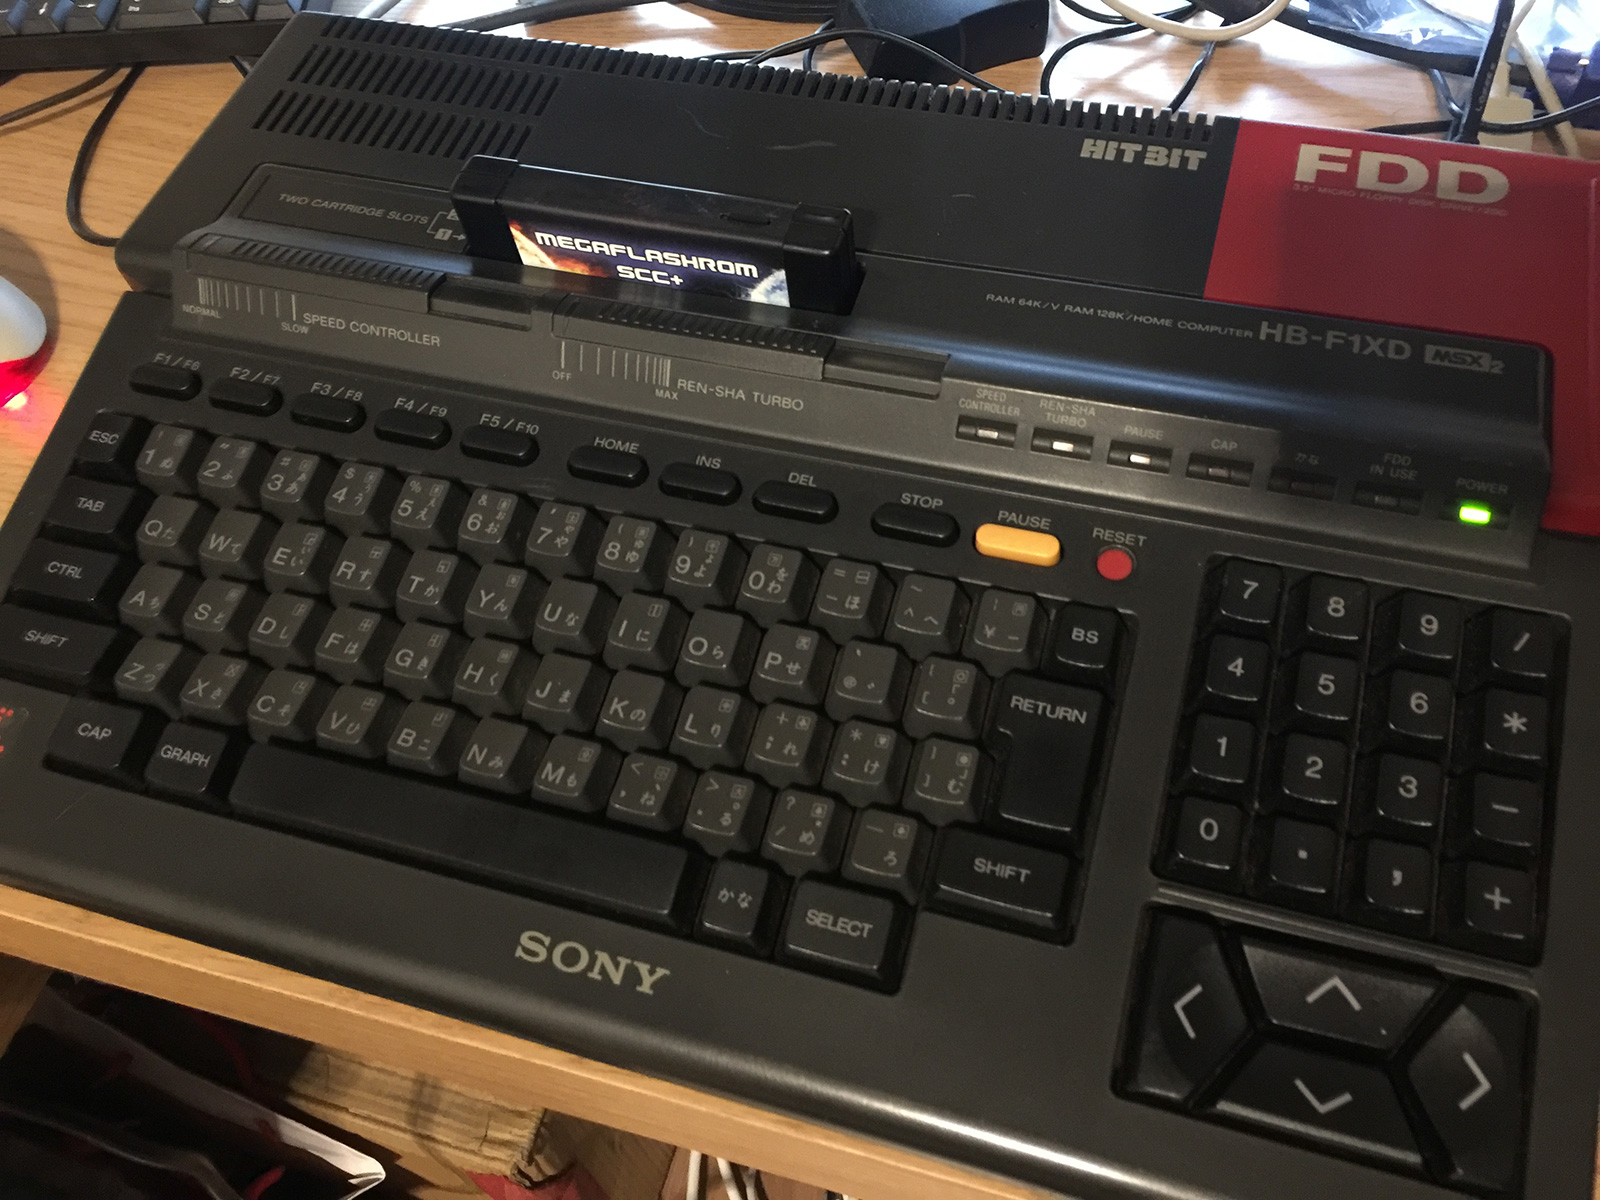 MSX2 HB-F1XD con el MegaFlashROM SCC+ SD insertado